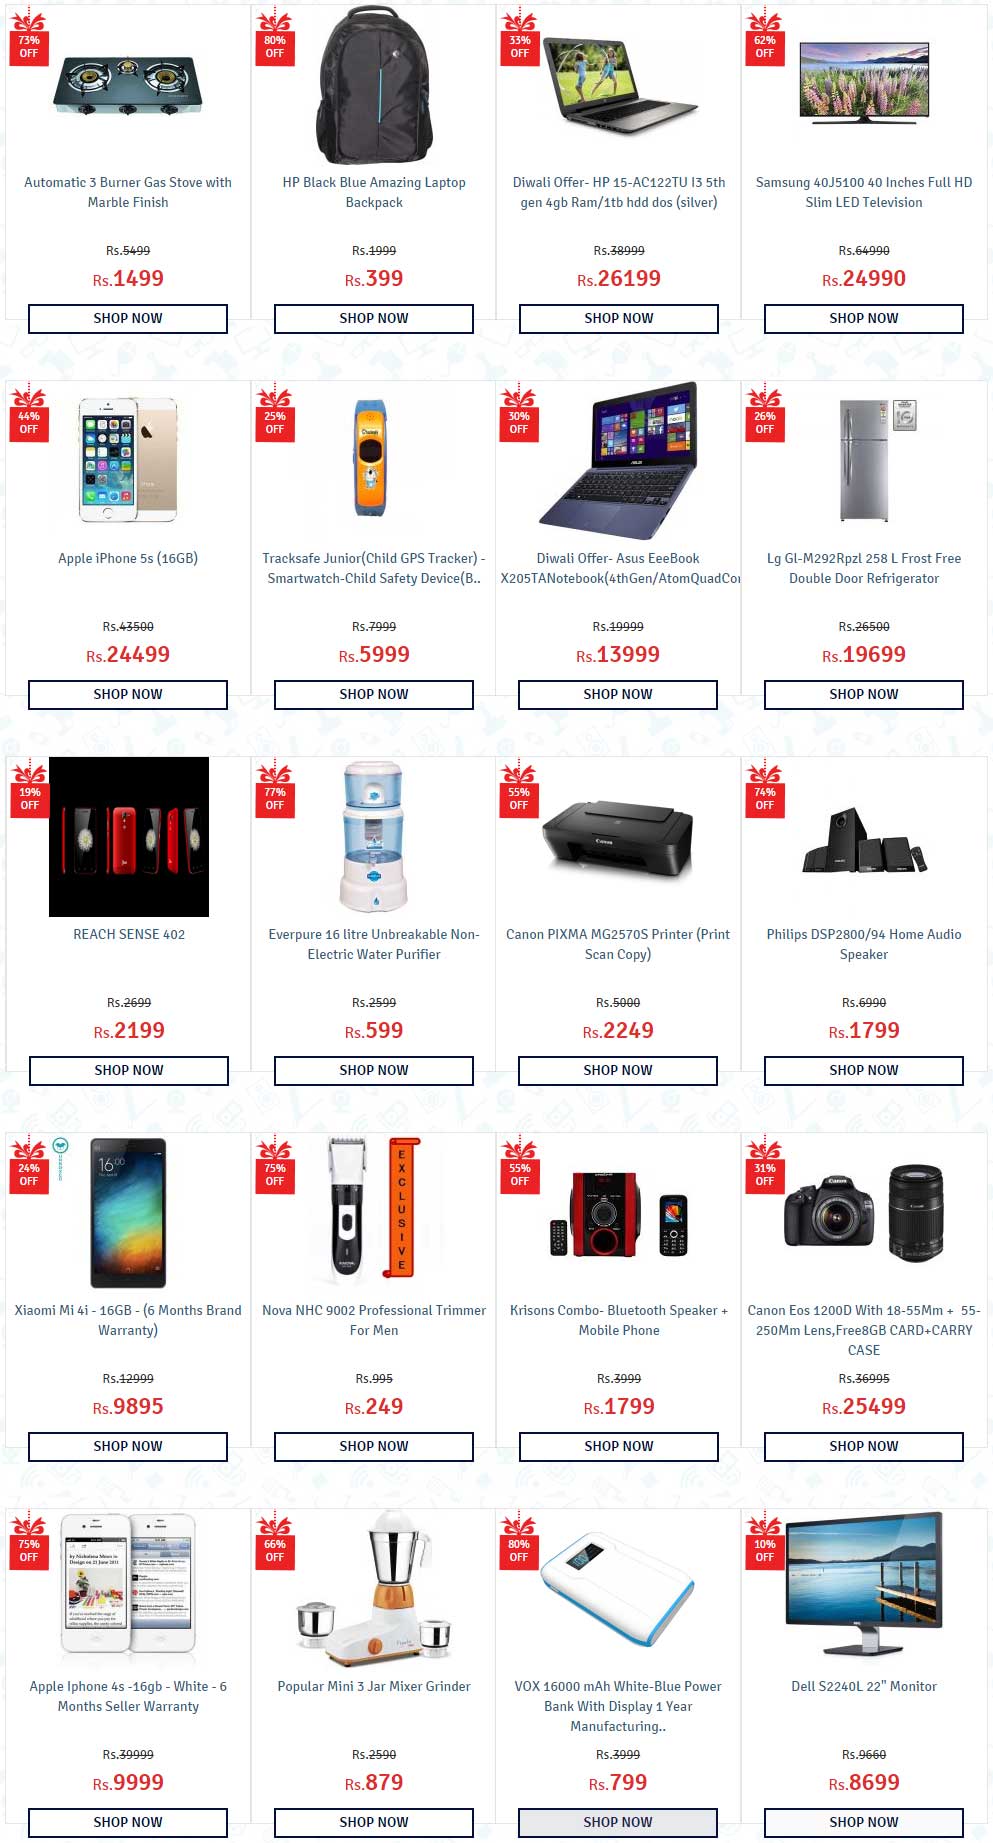 shopclues-black-friday-sale-india-27-november-2015-deals-offers-list